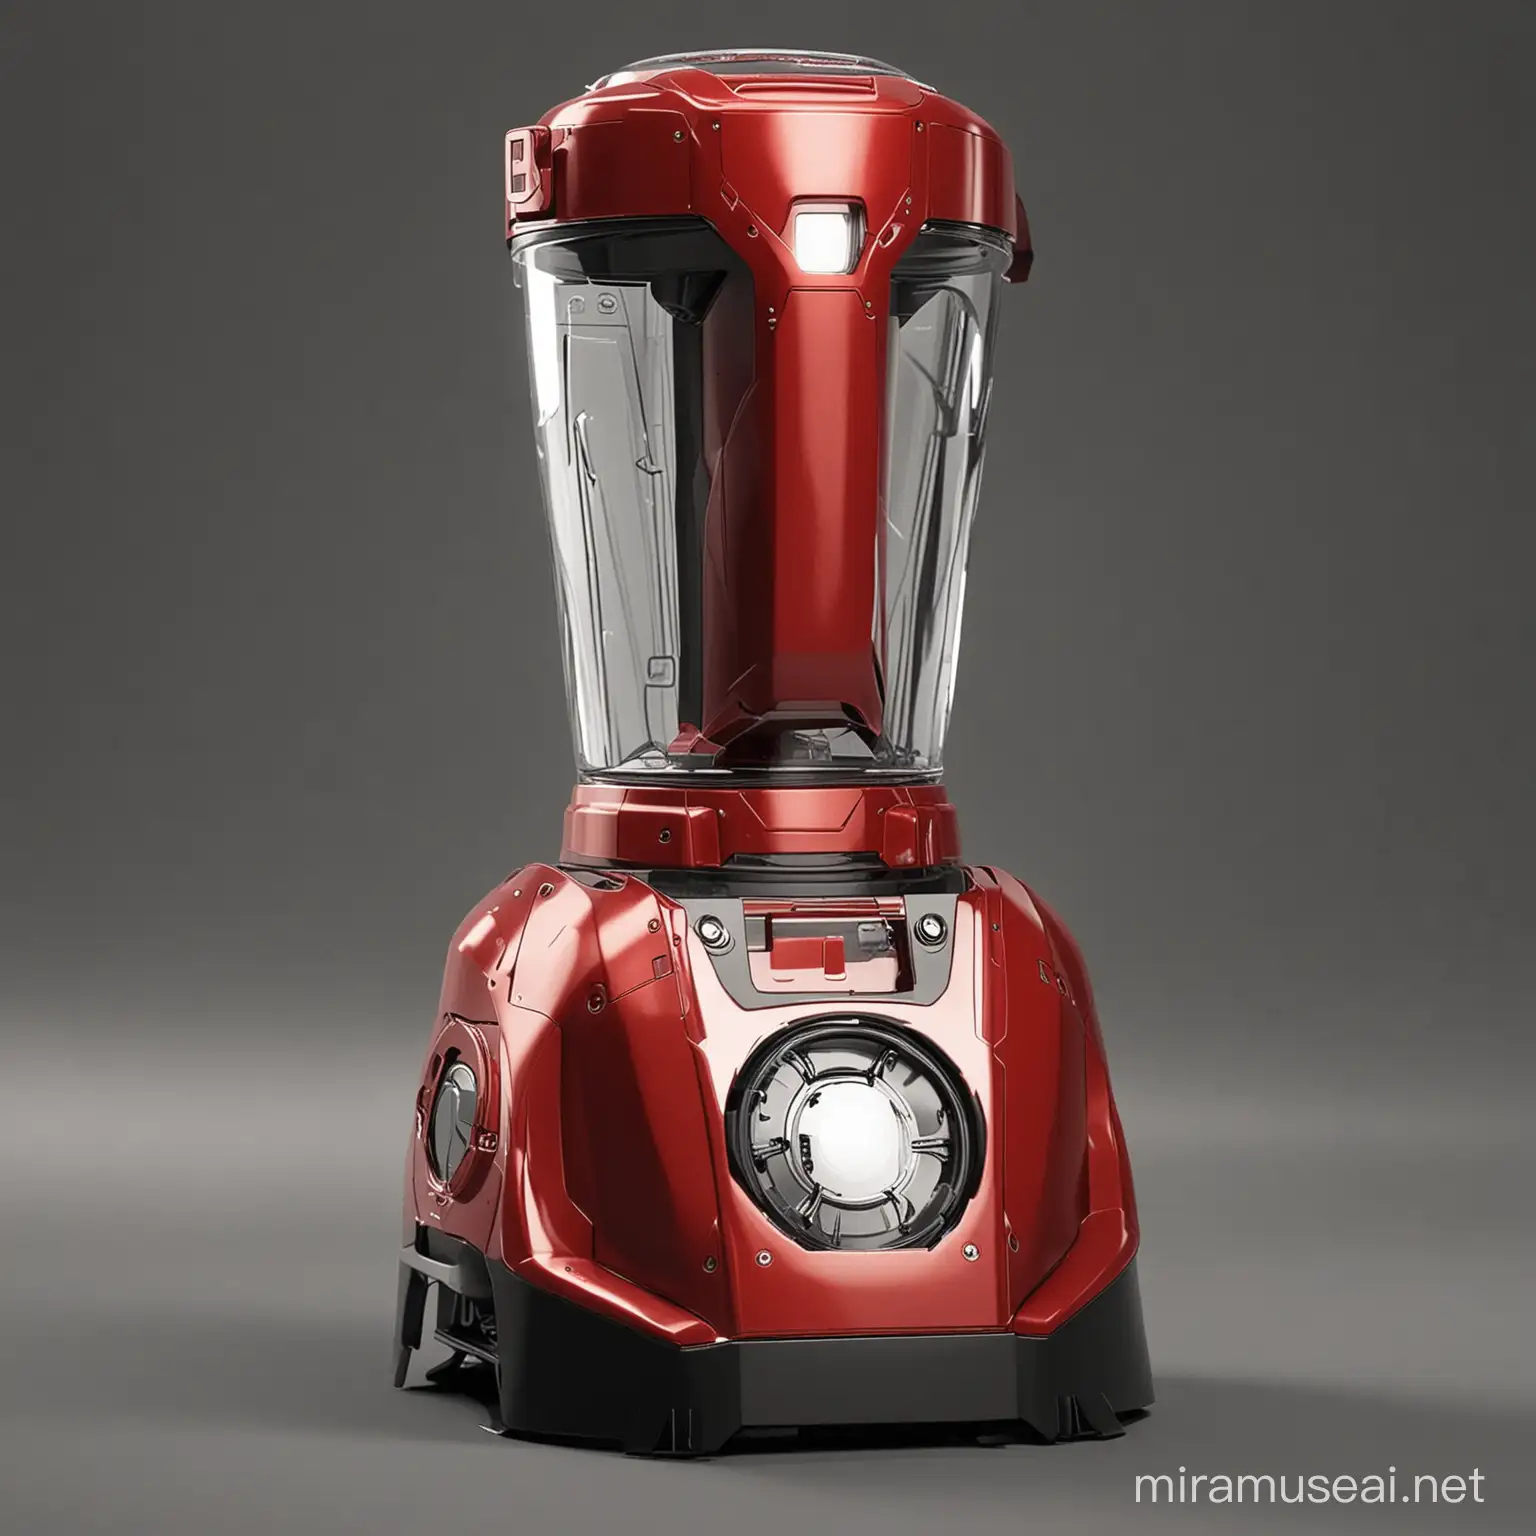 HighTech Blender Machine Inspired by Iron Man